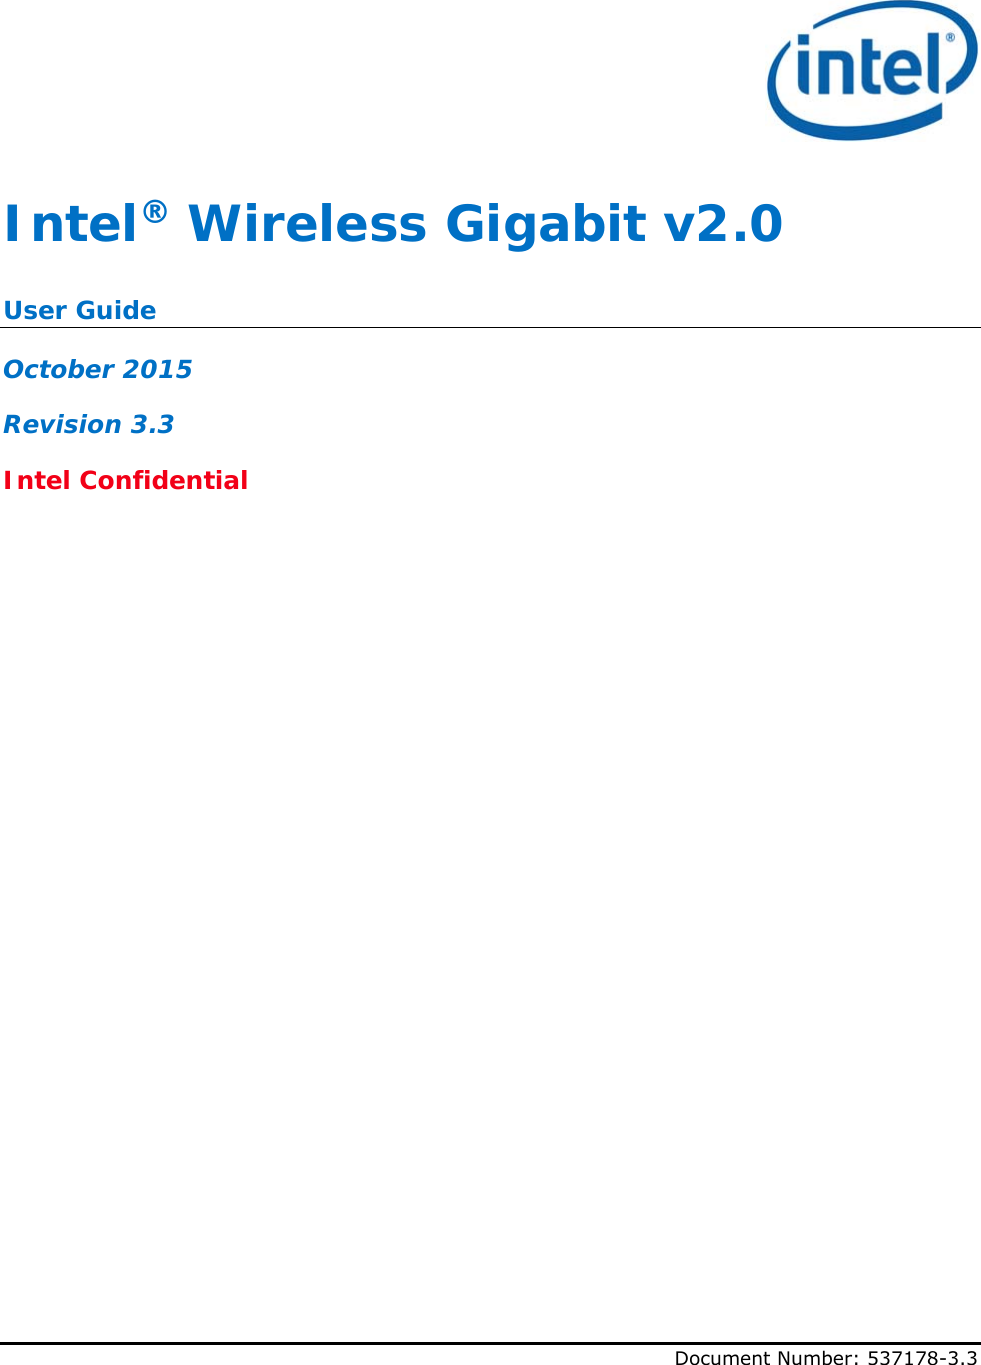        Document Number: 537178-3.3 Intel® Wireless Gigabit v2.0 User Guide October 2015 Revision 3.3 Intel Confidential  